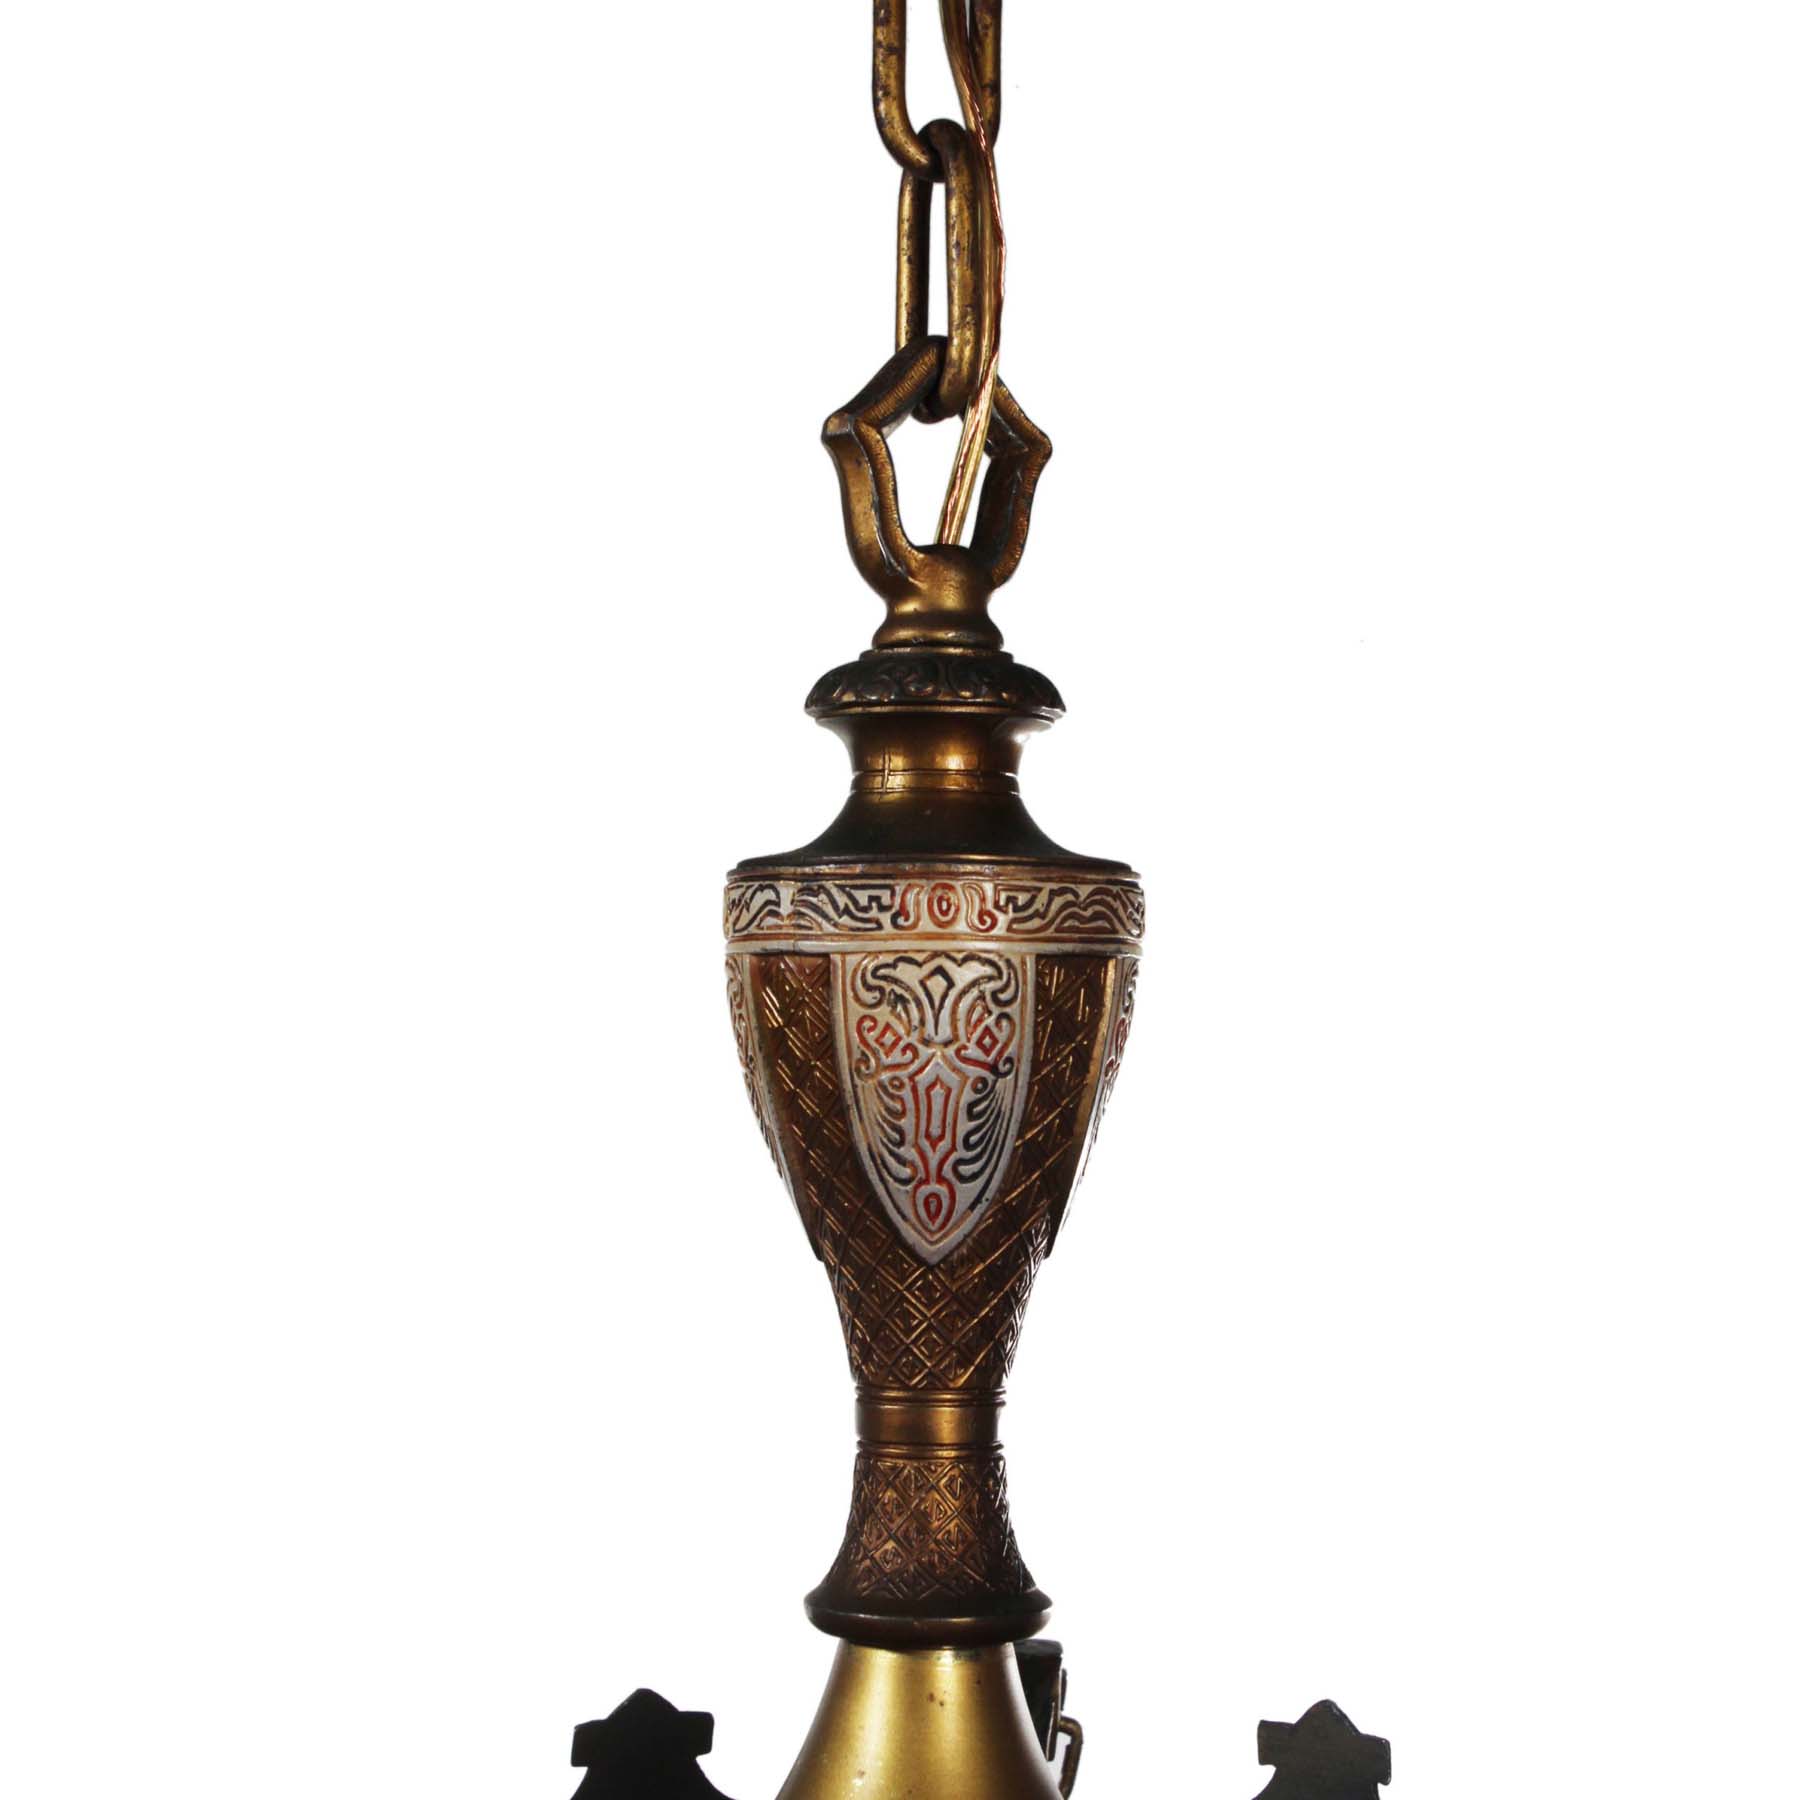 SOLD Antique Spanish Revival Chandelier, Empire Lighting-69983